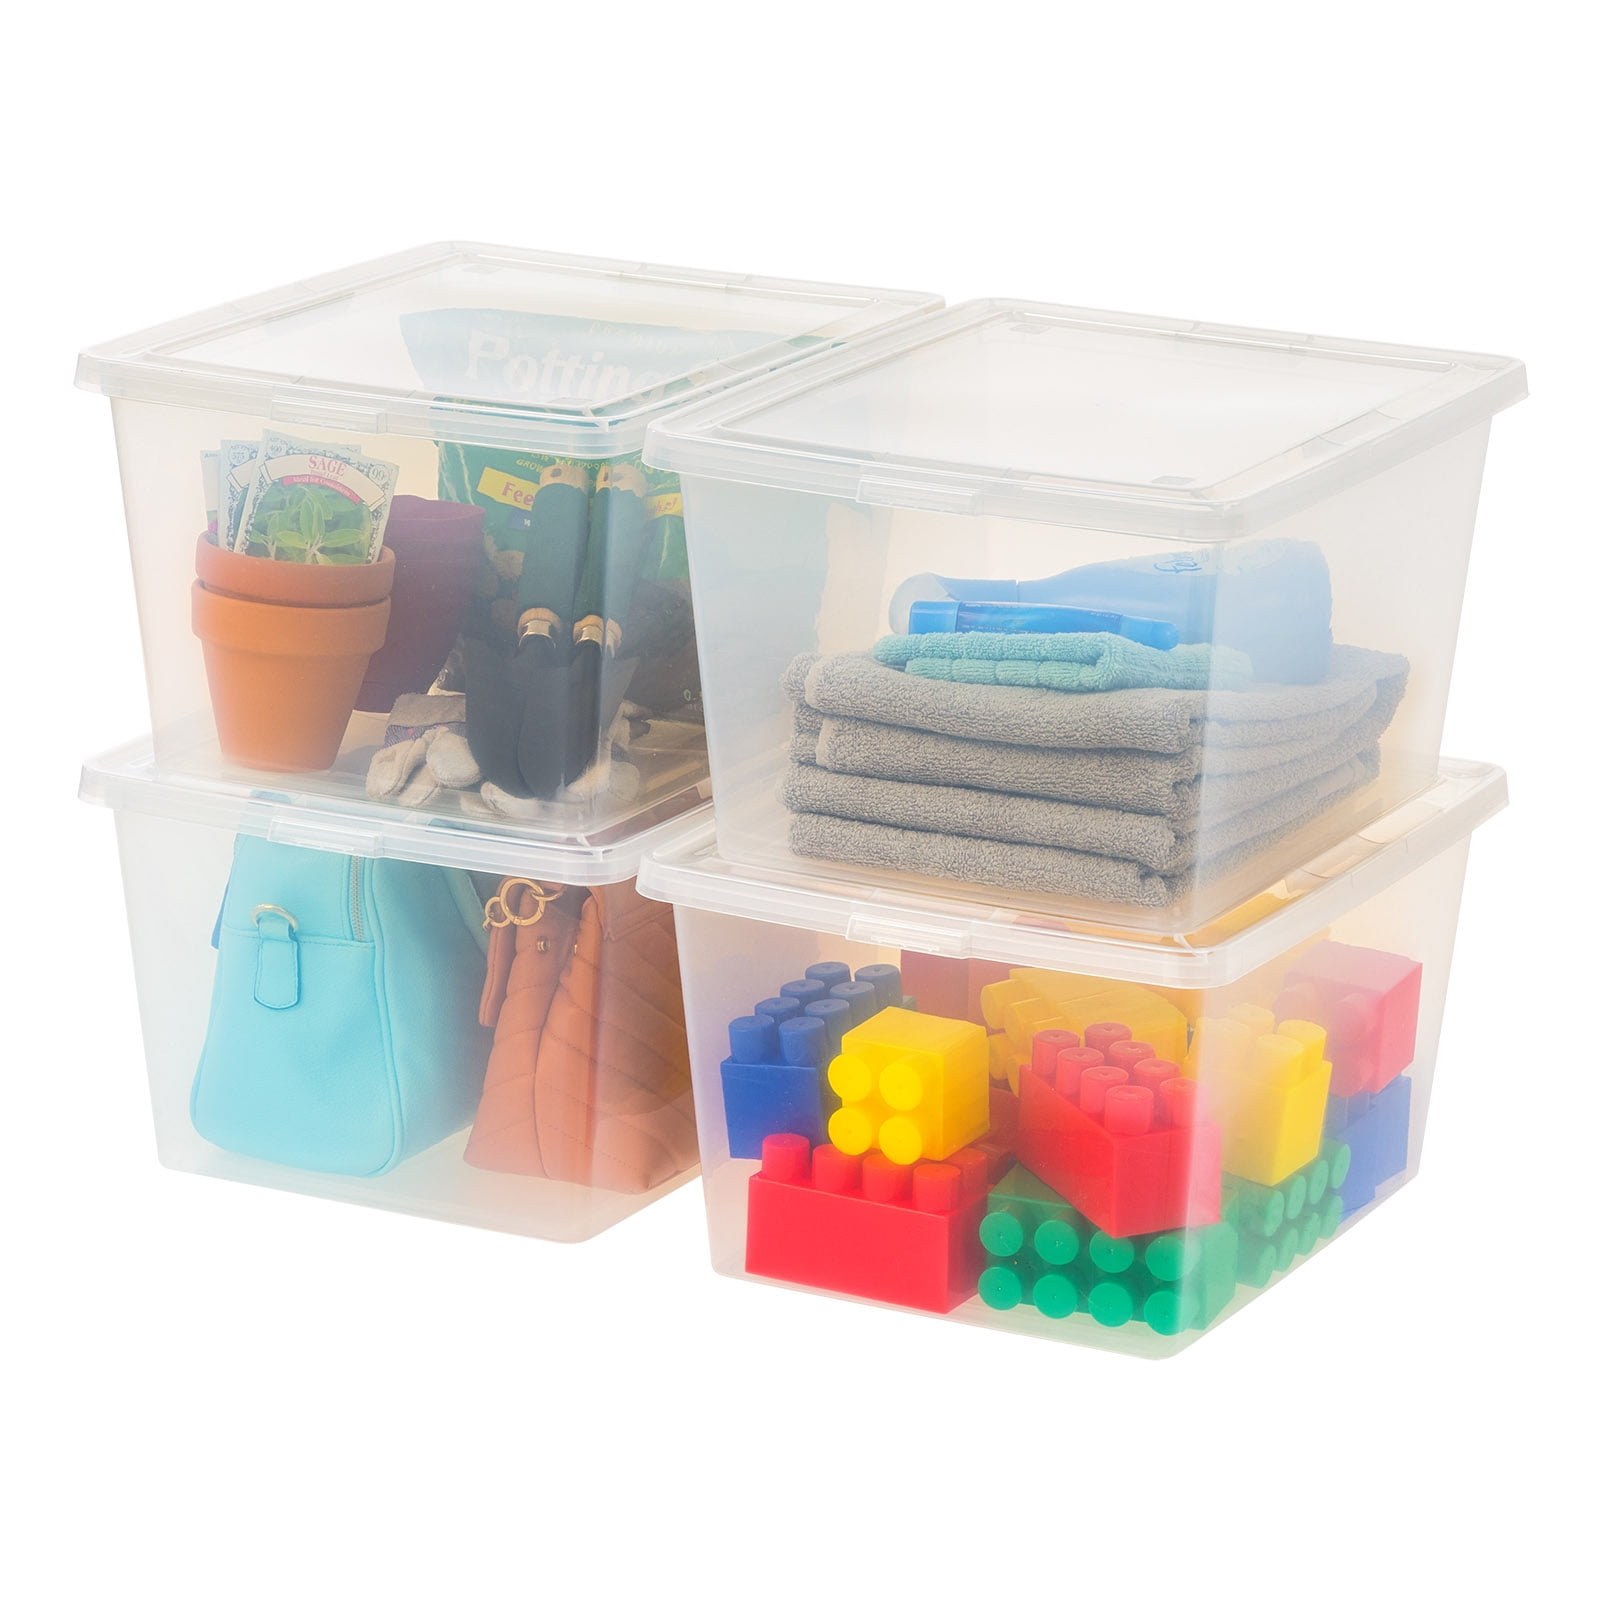 OEMVALATY Plastic Storage Bins,84 qt. Toy Storage Box and Organizer,Clear Storage Bins for Closet,Plastic Totes with Lids for Storage